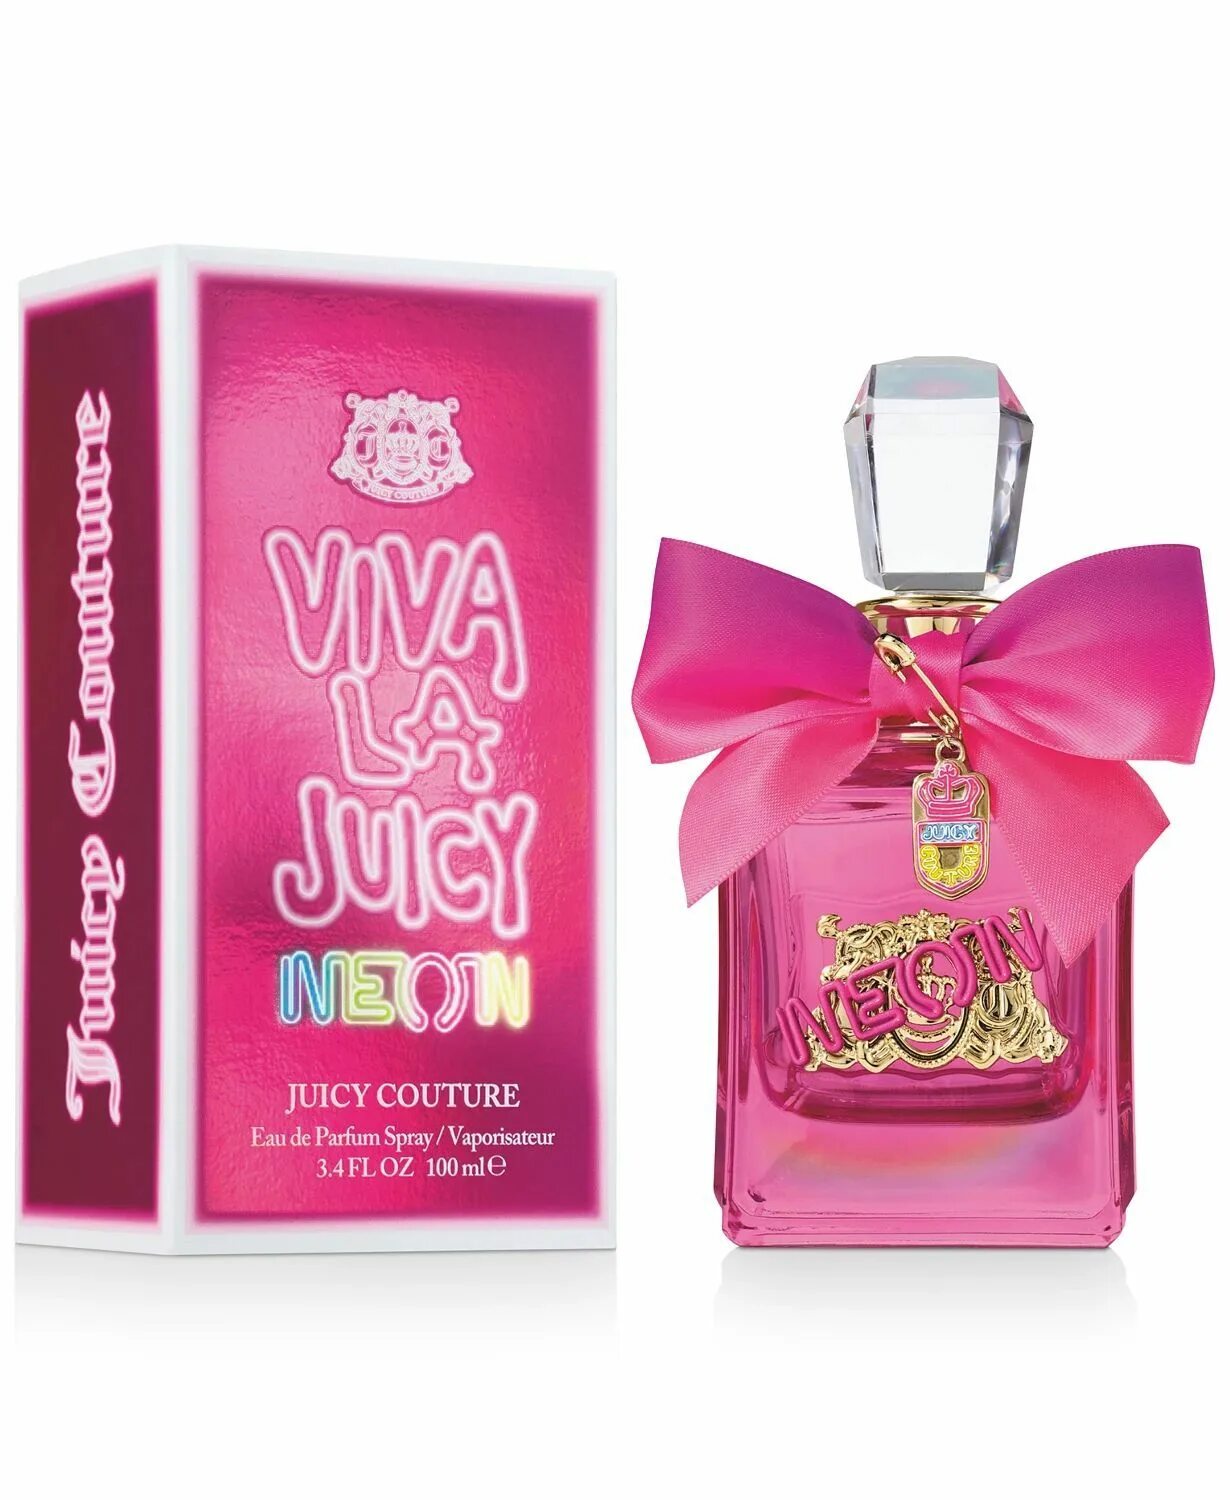 Viva couture. Juicy Couture Viva la juicy 100ml. Viva la juicy Neon Eau de Parfum juicy Couture,. Juicy Couture Viva la juicy 100ml EDP. Viva la juicy духи.